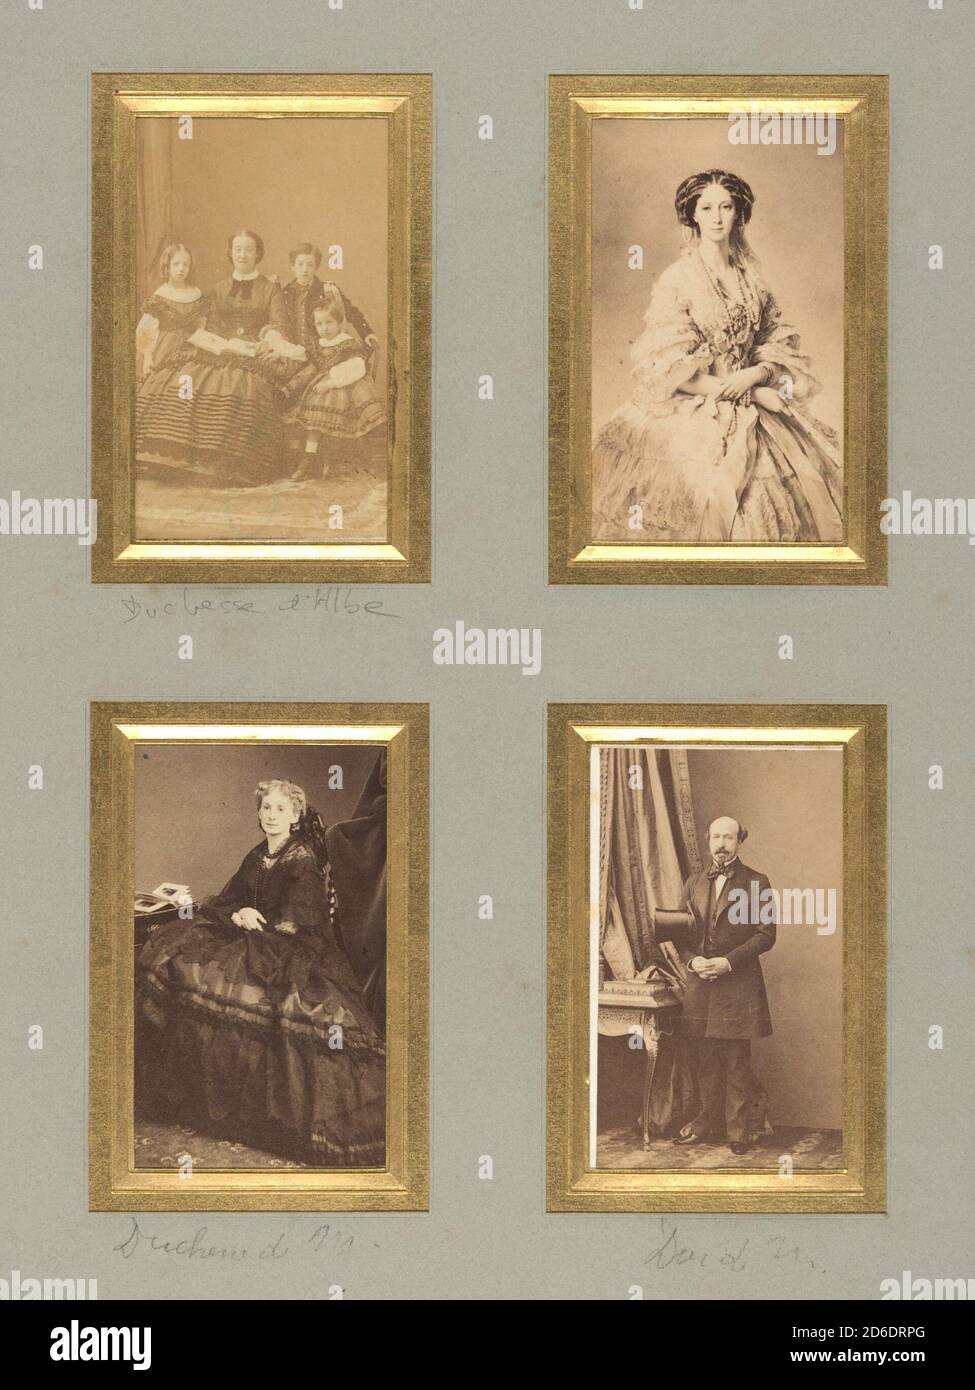 [Duchesse d'Albe, Unknown Sitter, Duchesse de Morny, and Duc de Morny], before 1865. Stock Photo